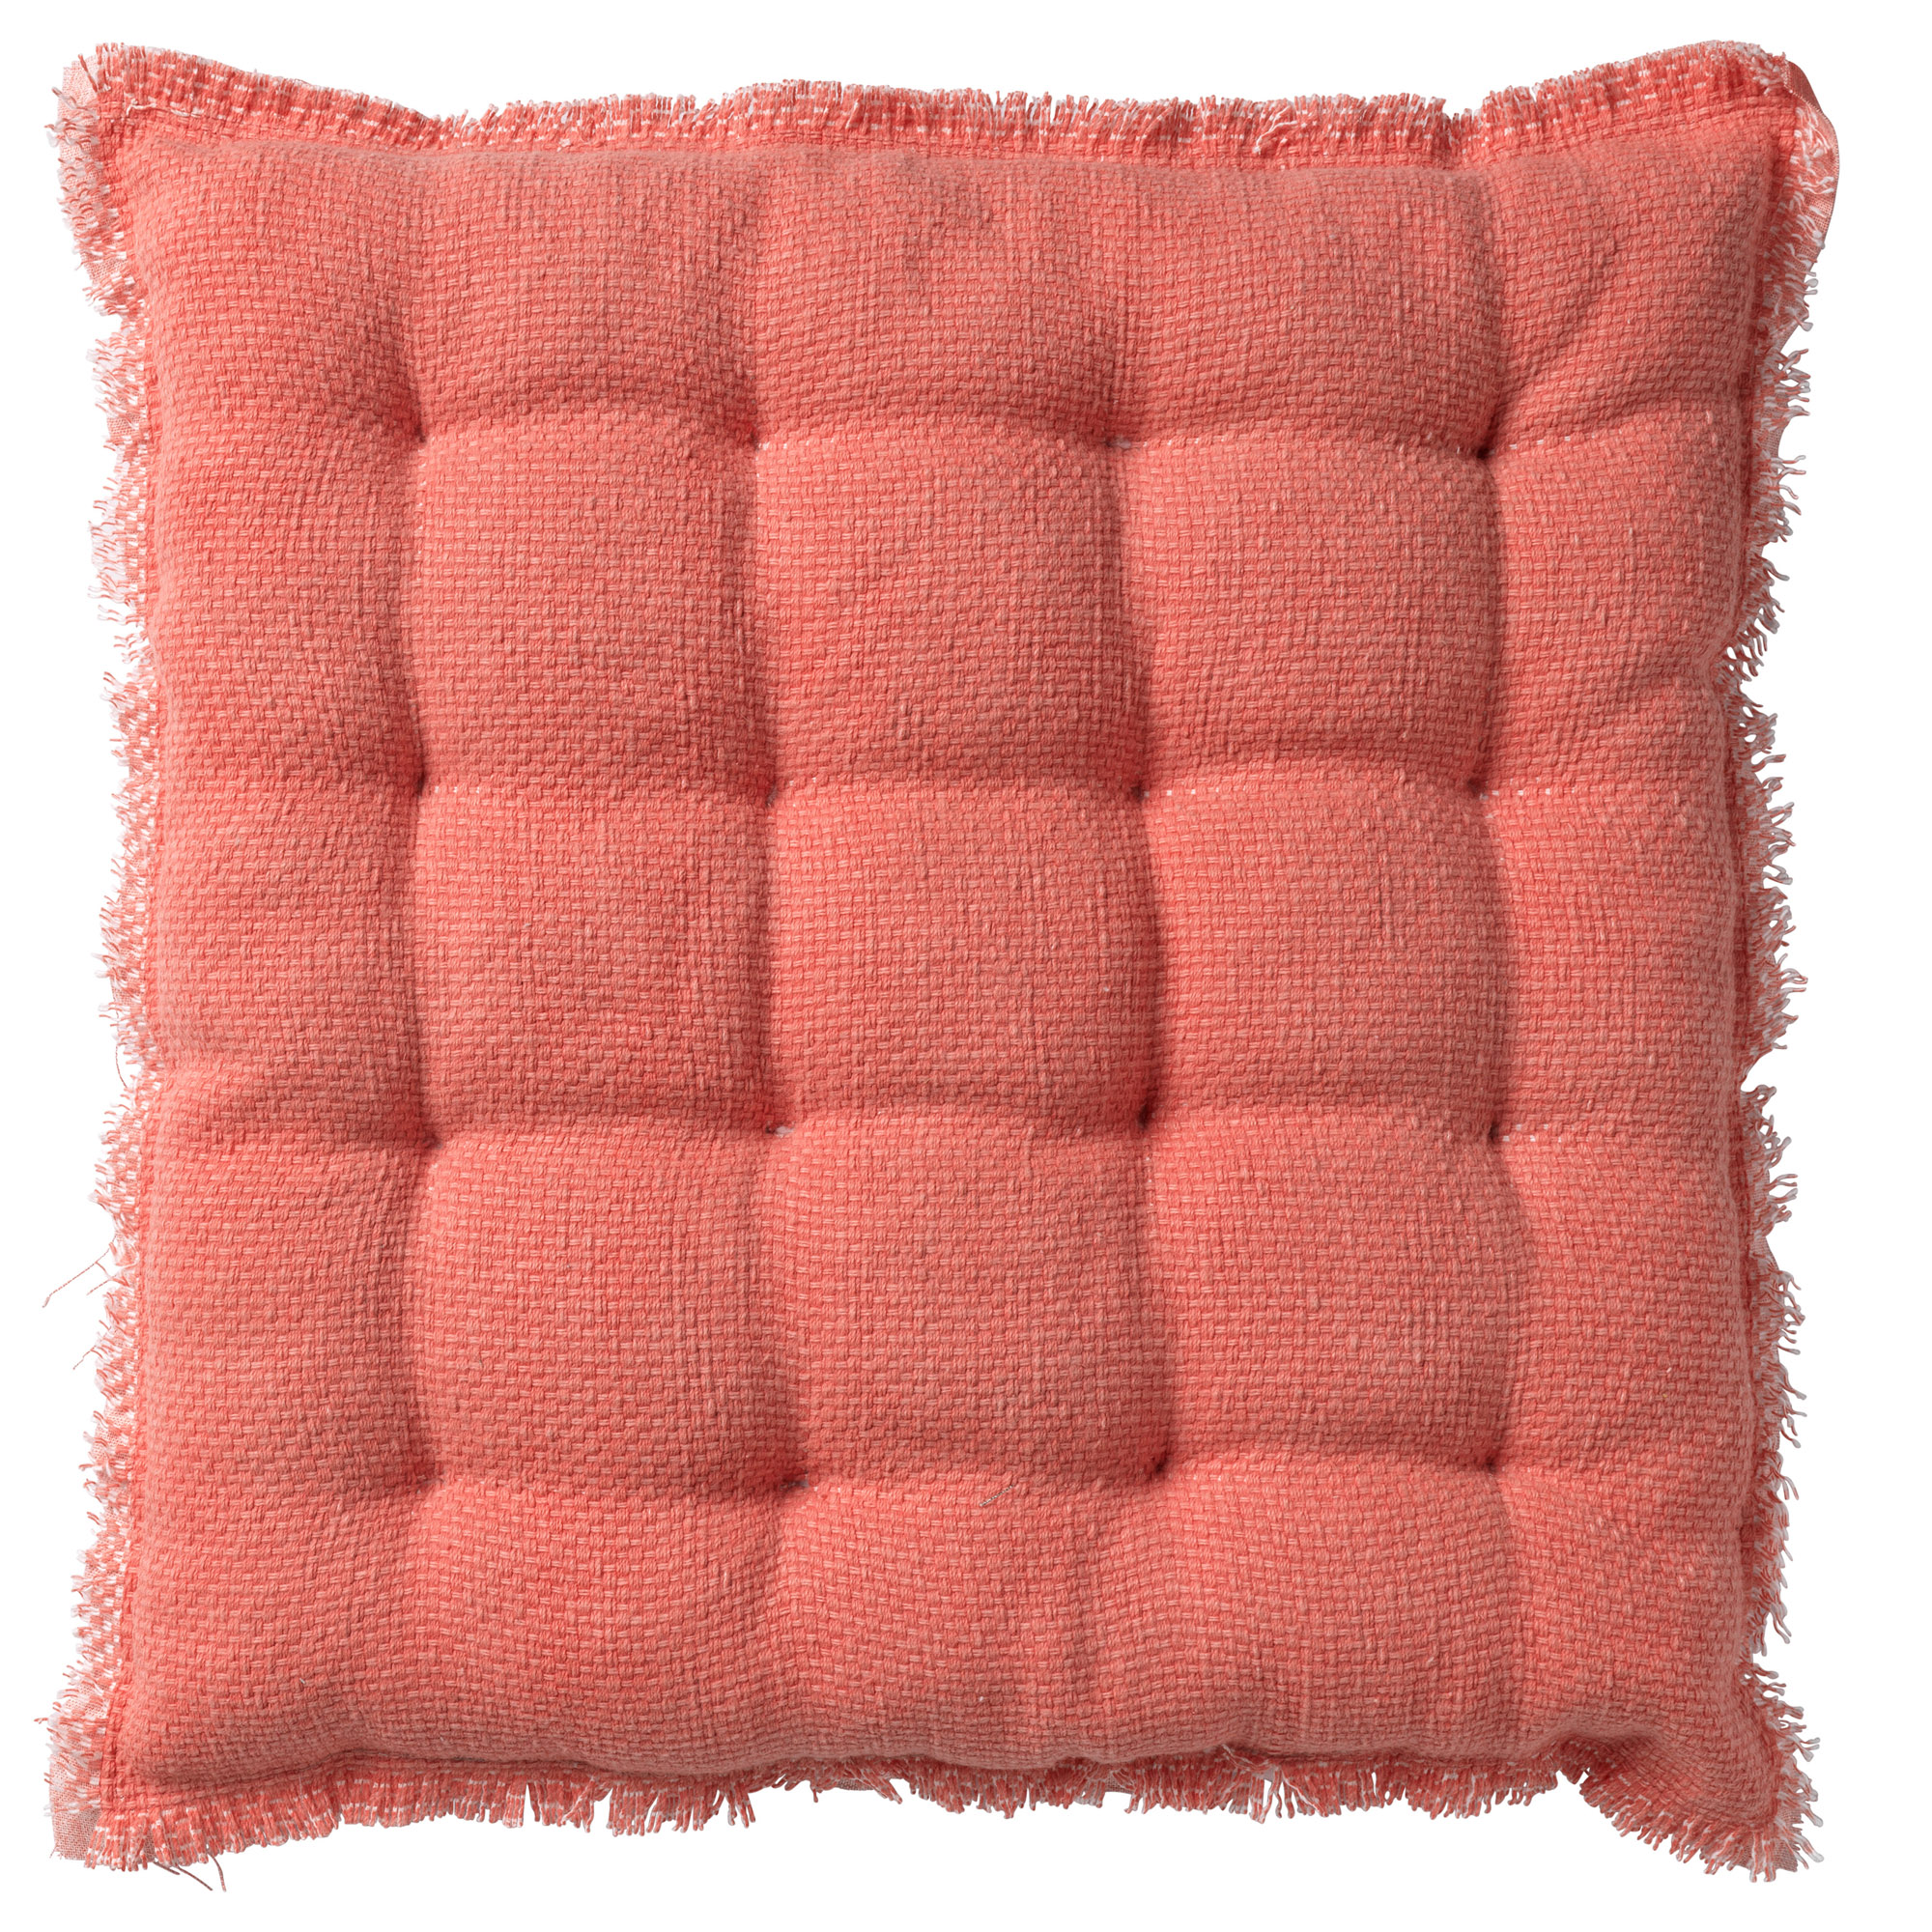 BURTO - Seat pad cushion washed coton Coral 40x40 cm